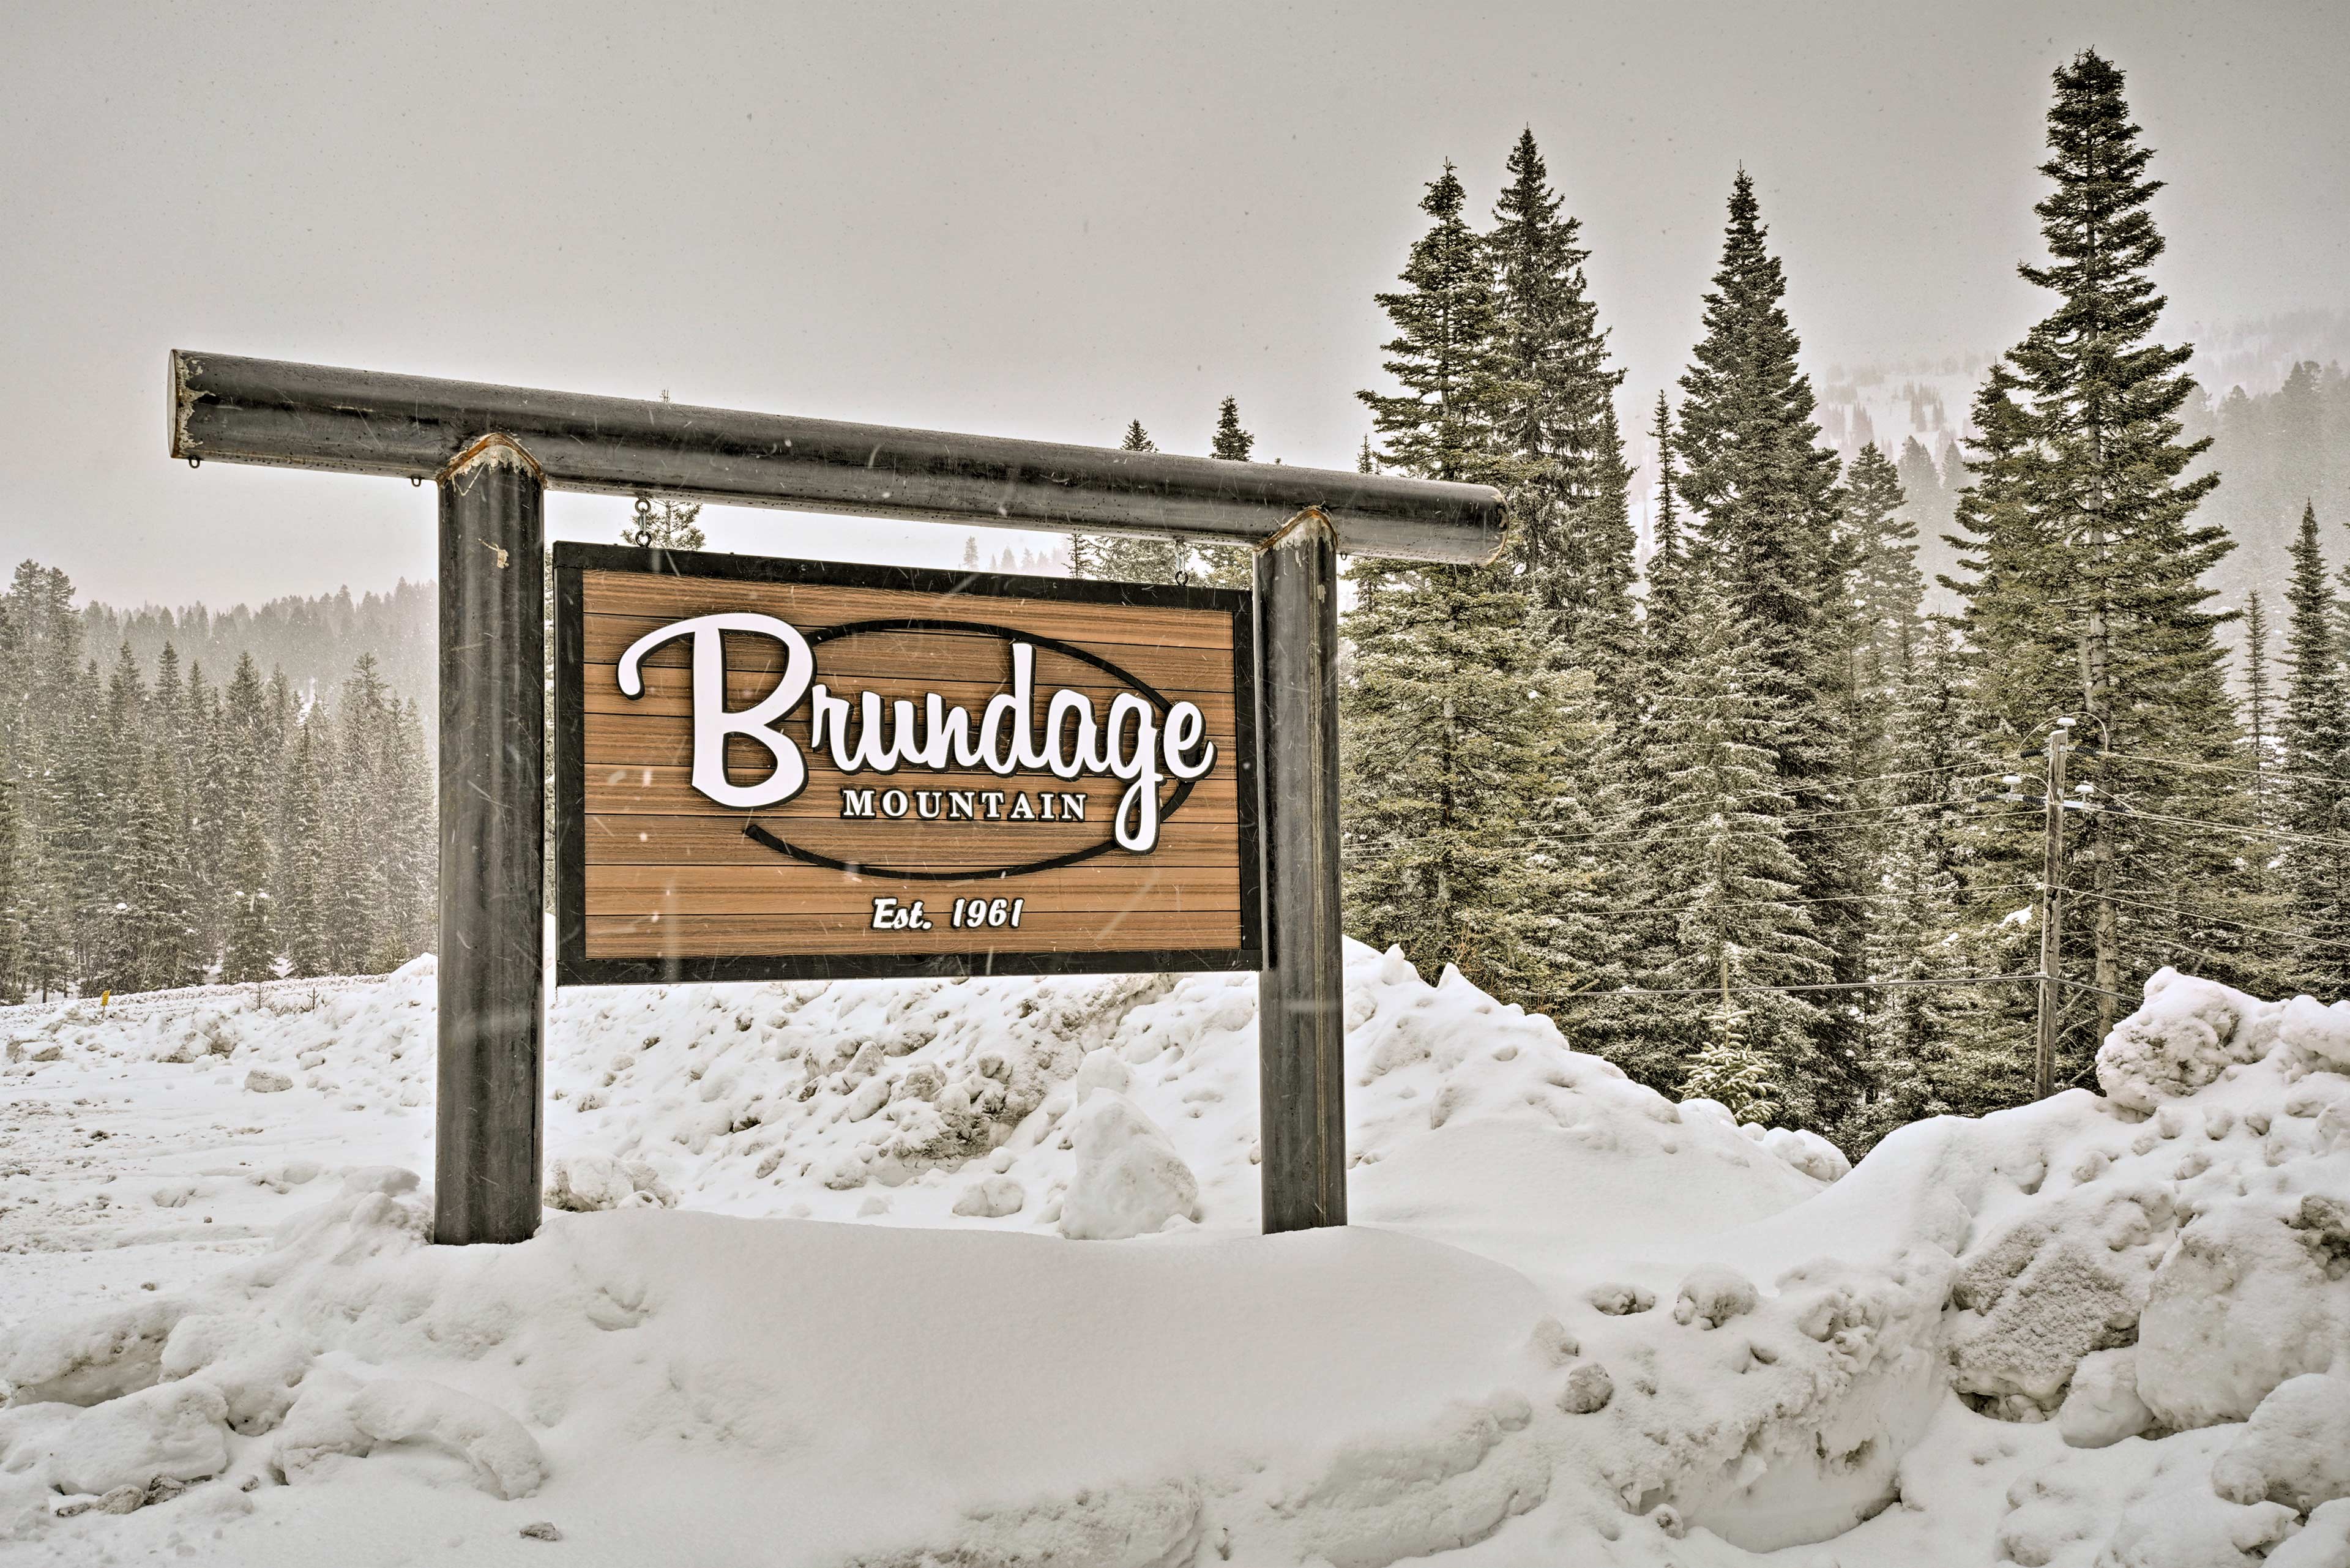 Brundage Mountain Ski Resort is just under 30 minutes away!